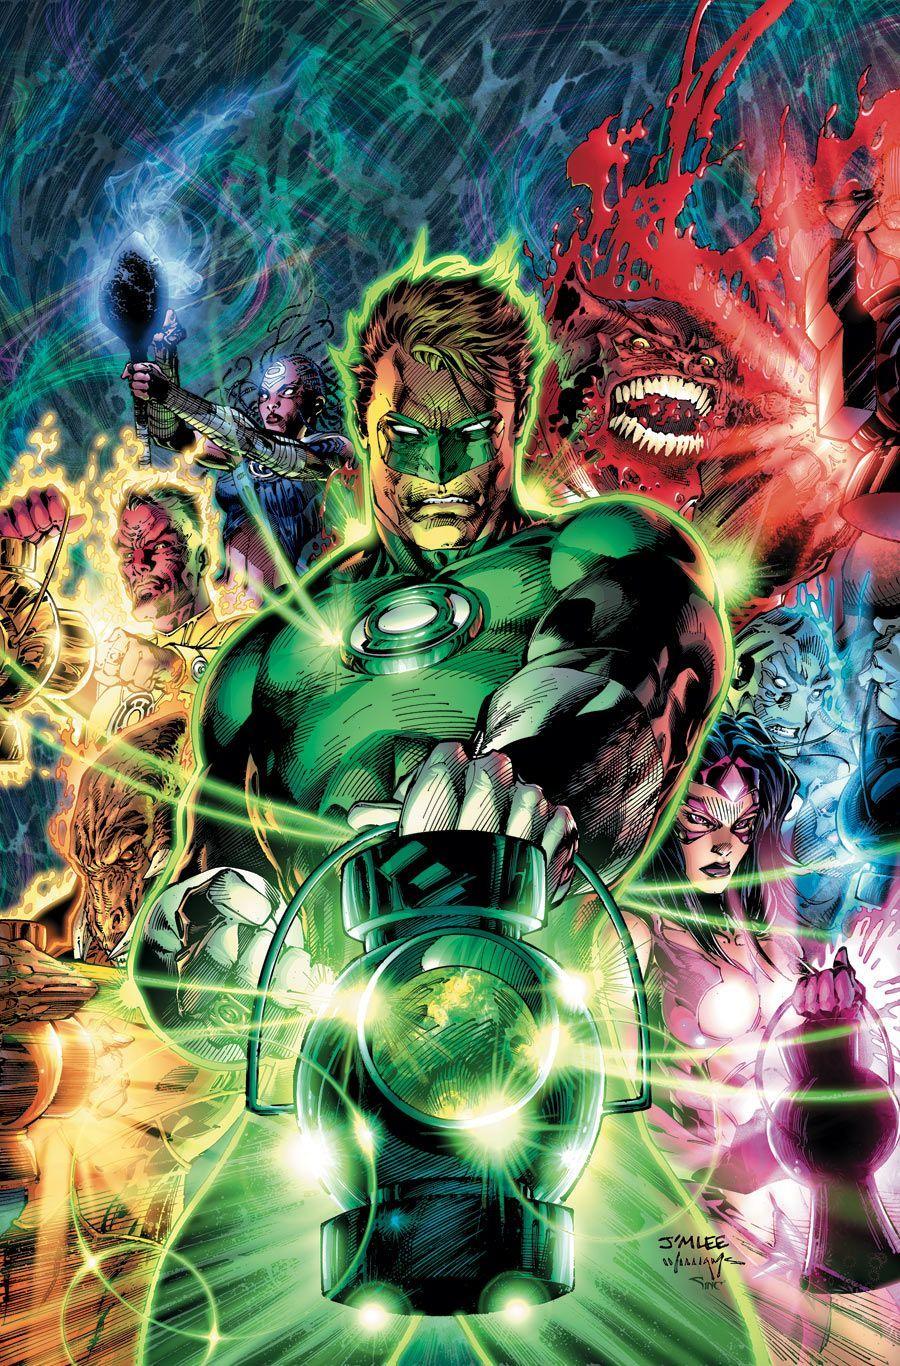 image for: Cyborg Debuts, Darkseid War Heats Up in DC Comics